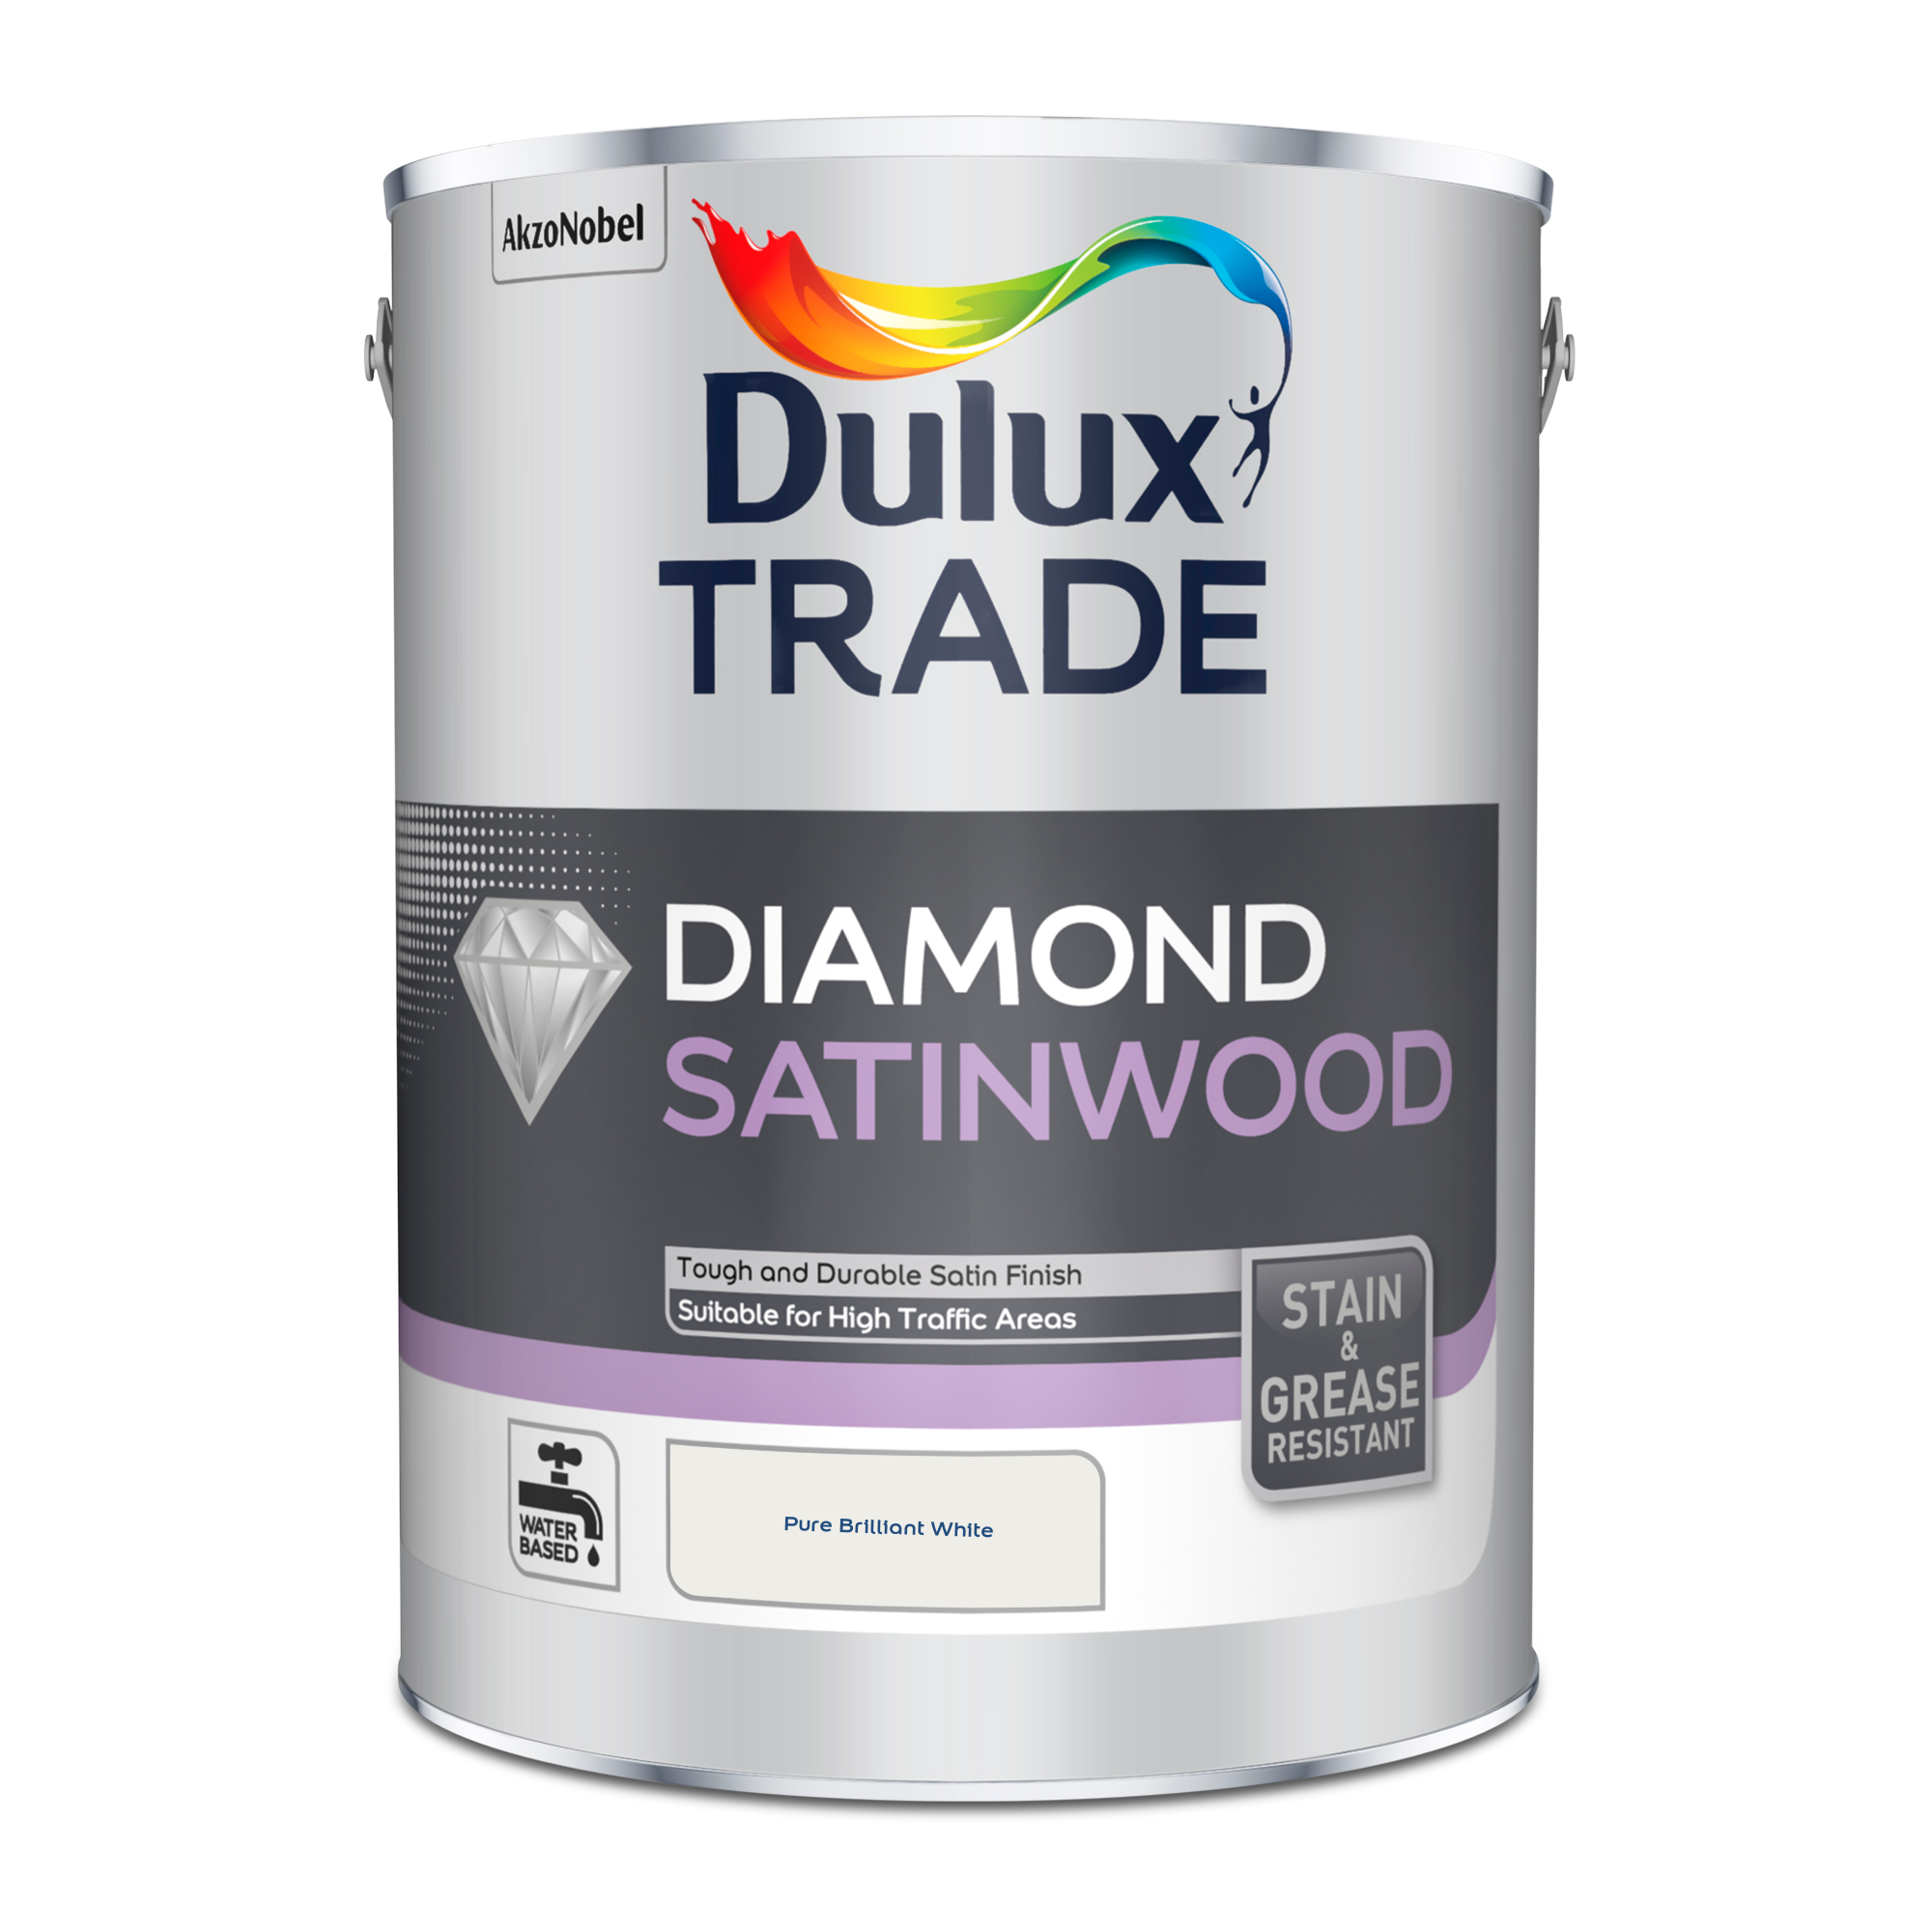 Dulux Trade Diamond Satinwood - Pure Brilliant White